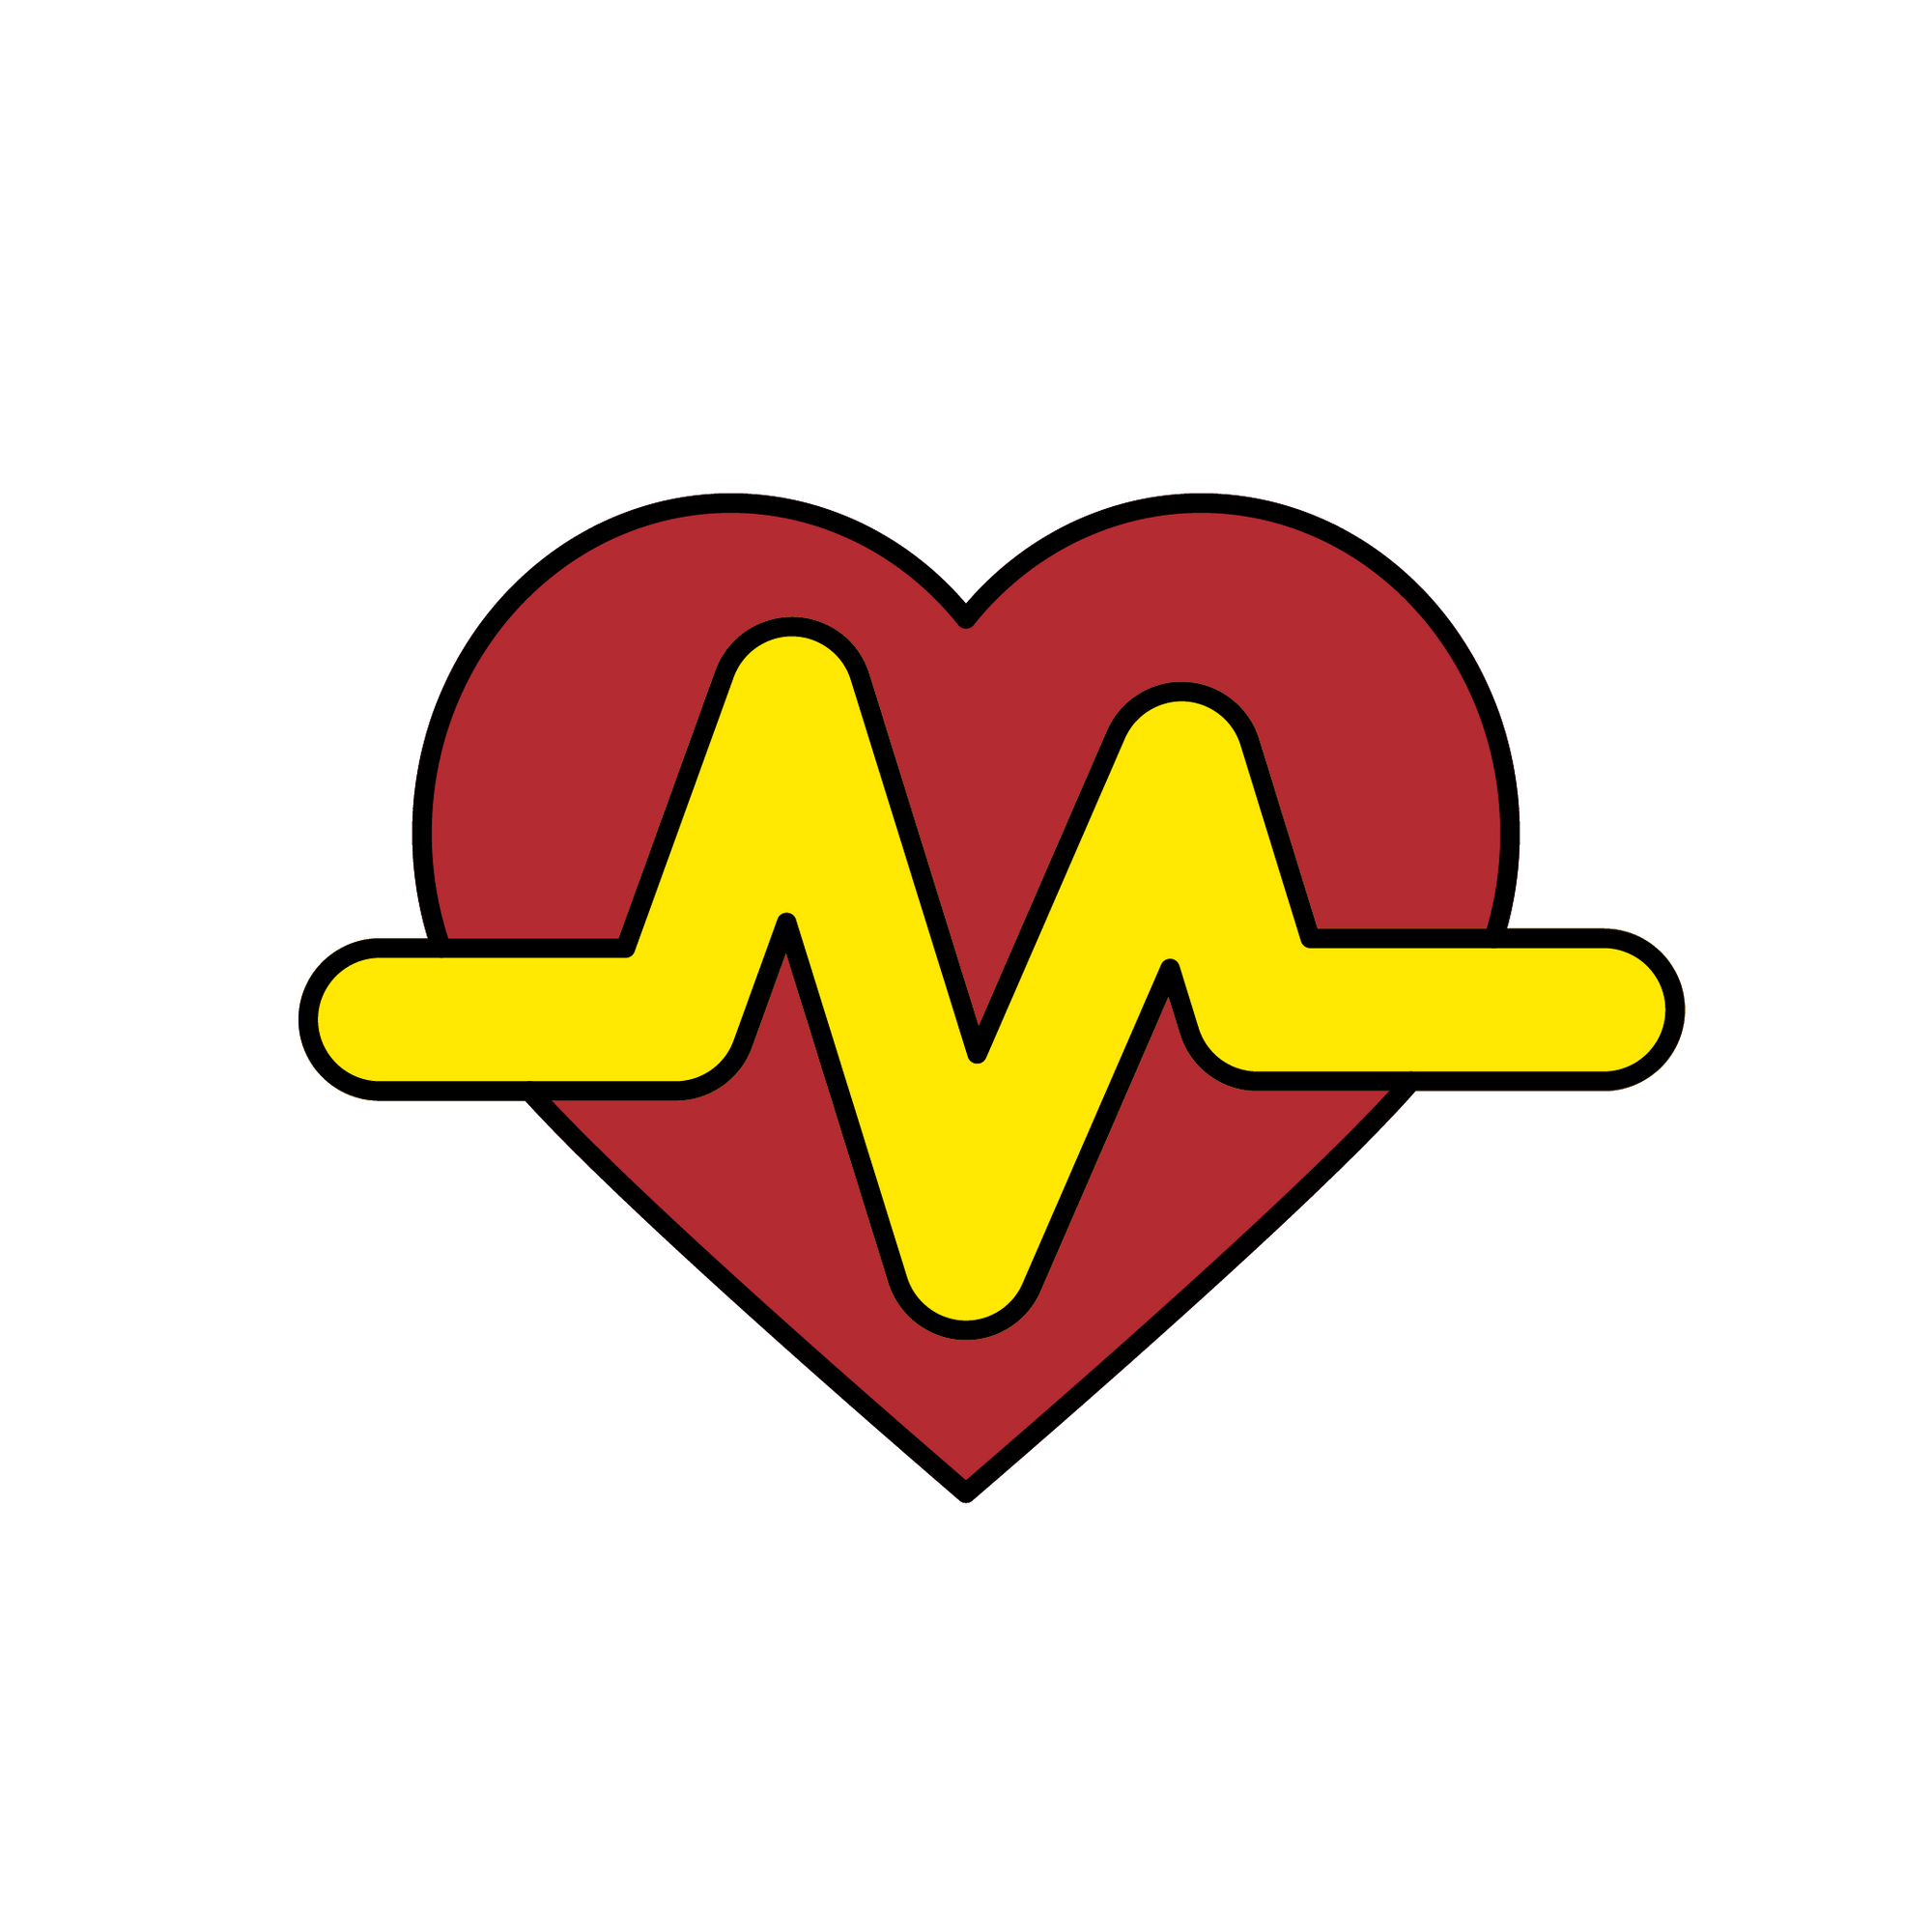 A heart with an EKG beat on it